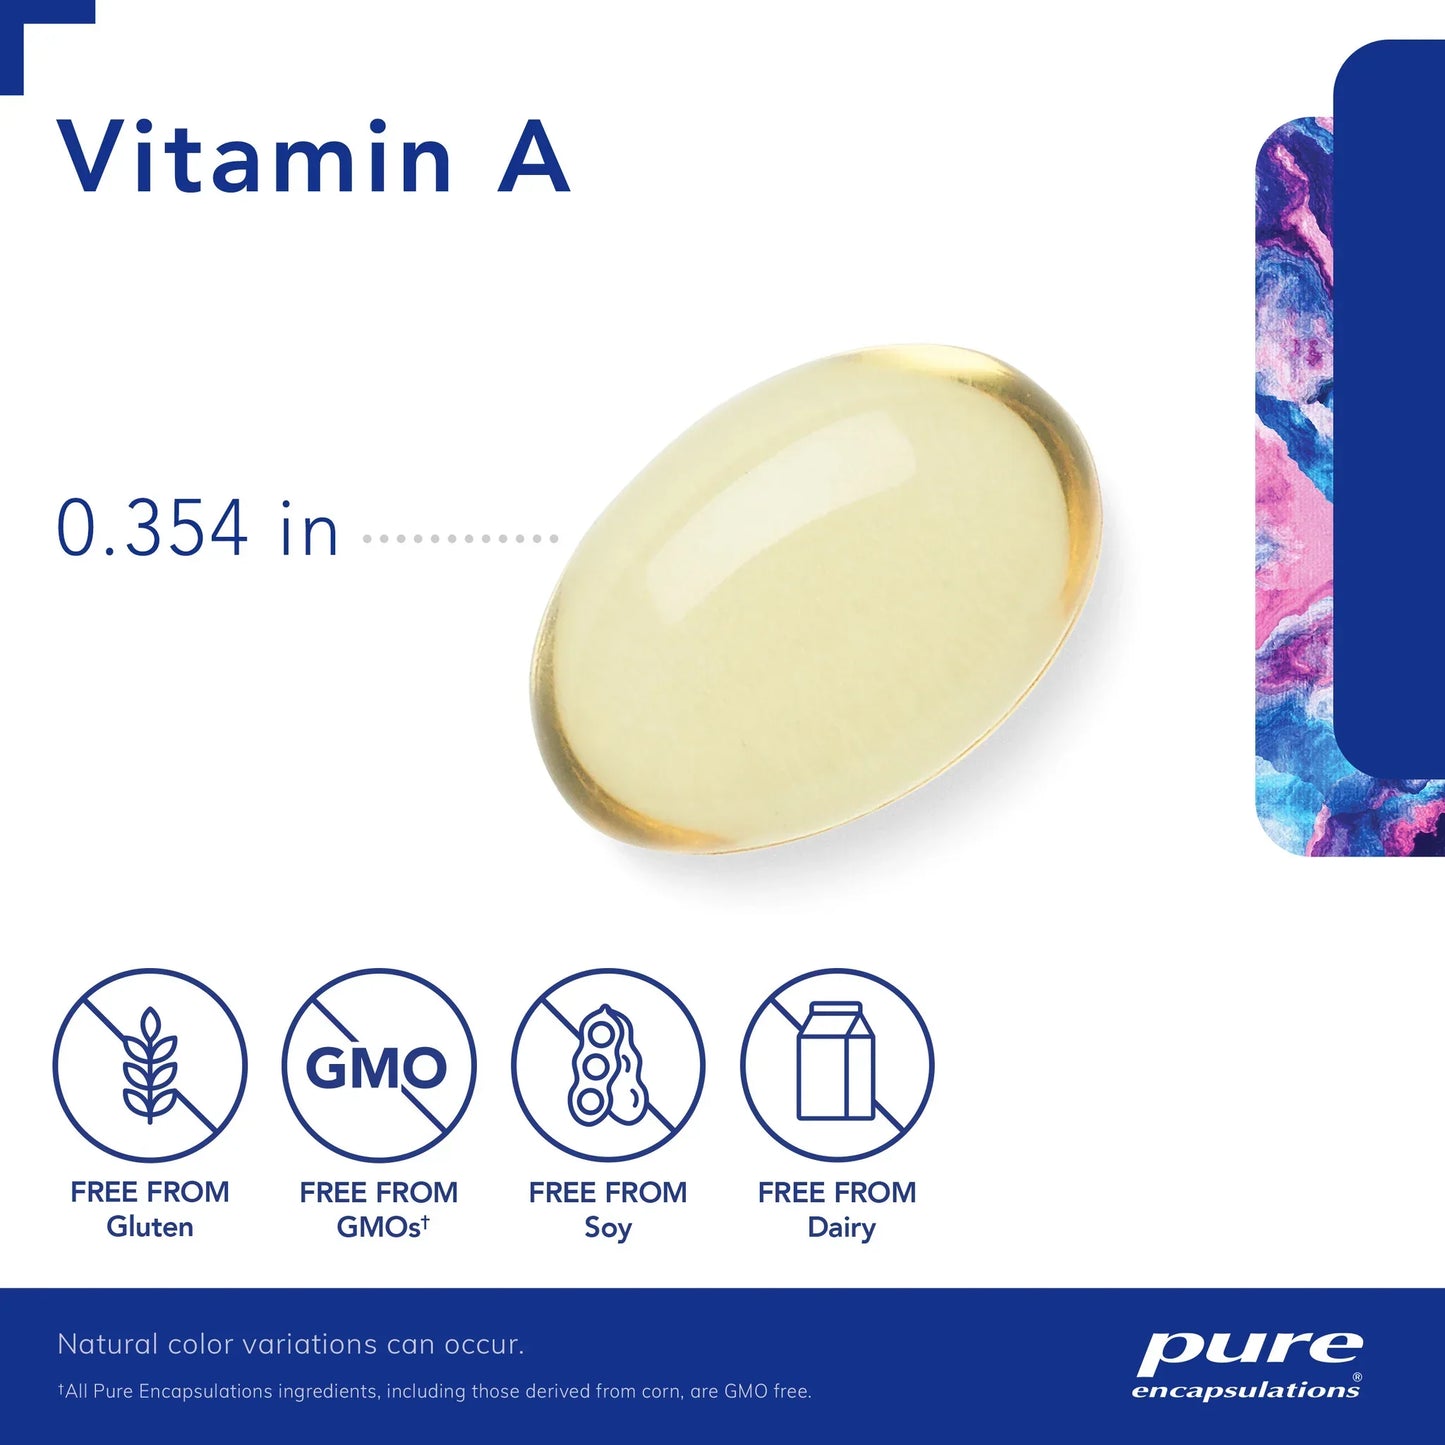 Vitamin A 3,000 mcg (10,000 IU)